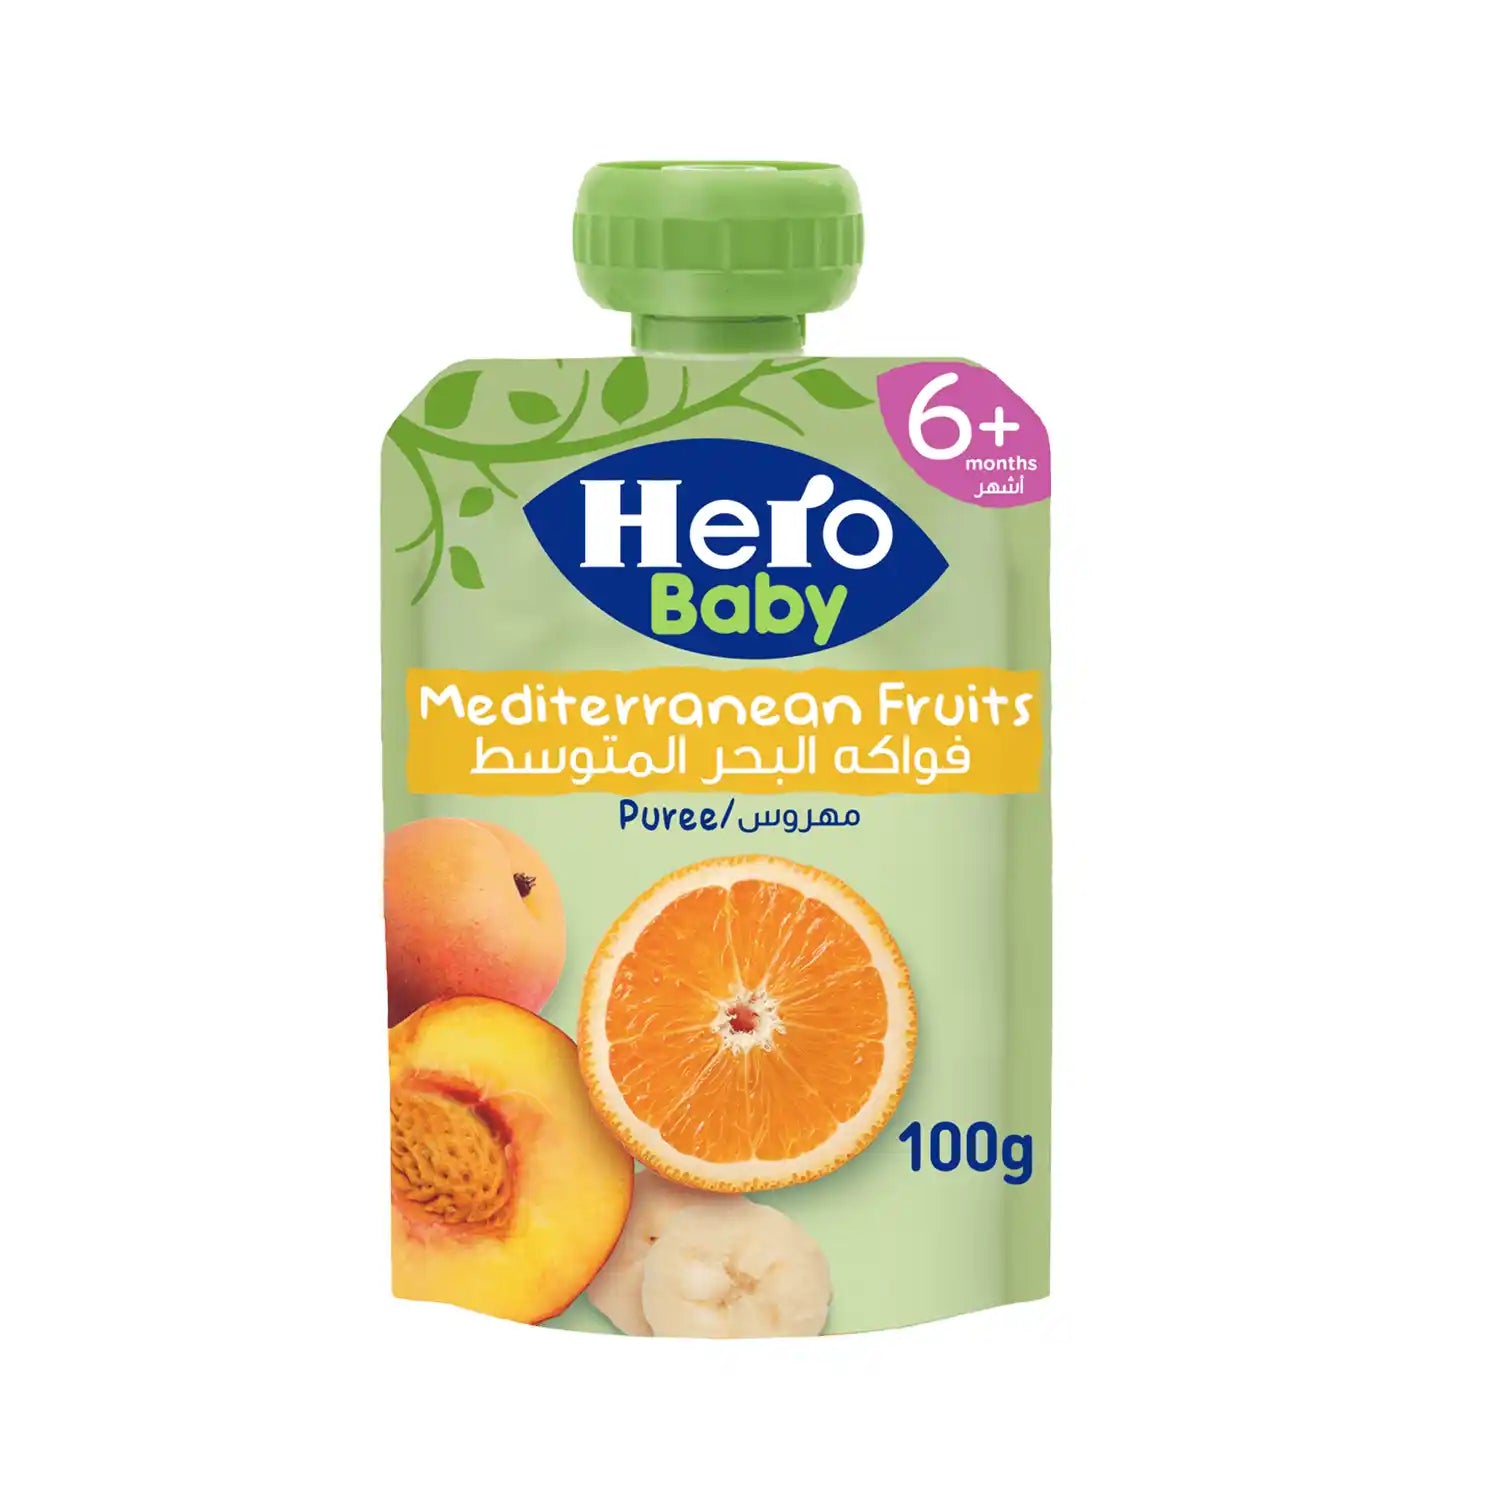 Buy Hero Baby Mediterranean Fruits Puree for Babies - 100gms Online in India at uyyaala.com